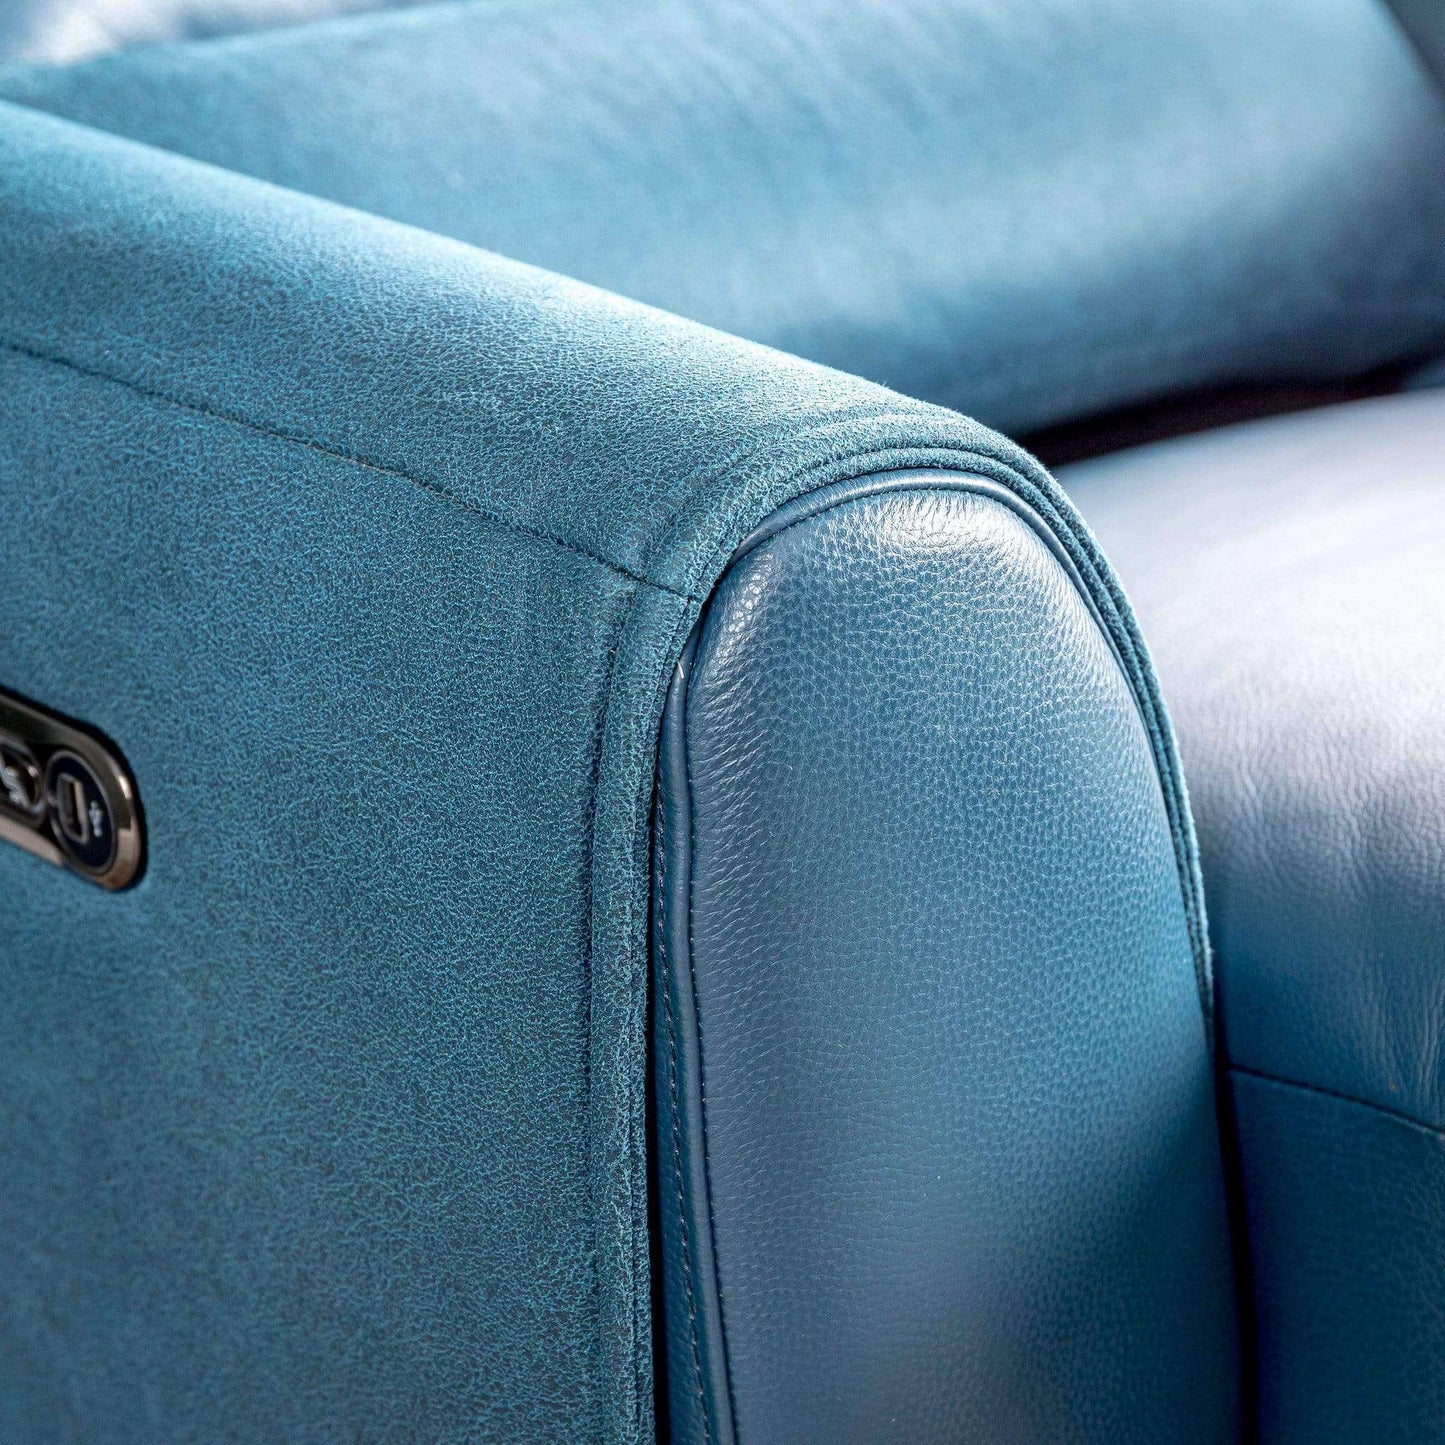 Furniture  -  Comfort King Aspen Electric Reclining Armchair  -  50153203